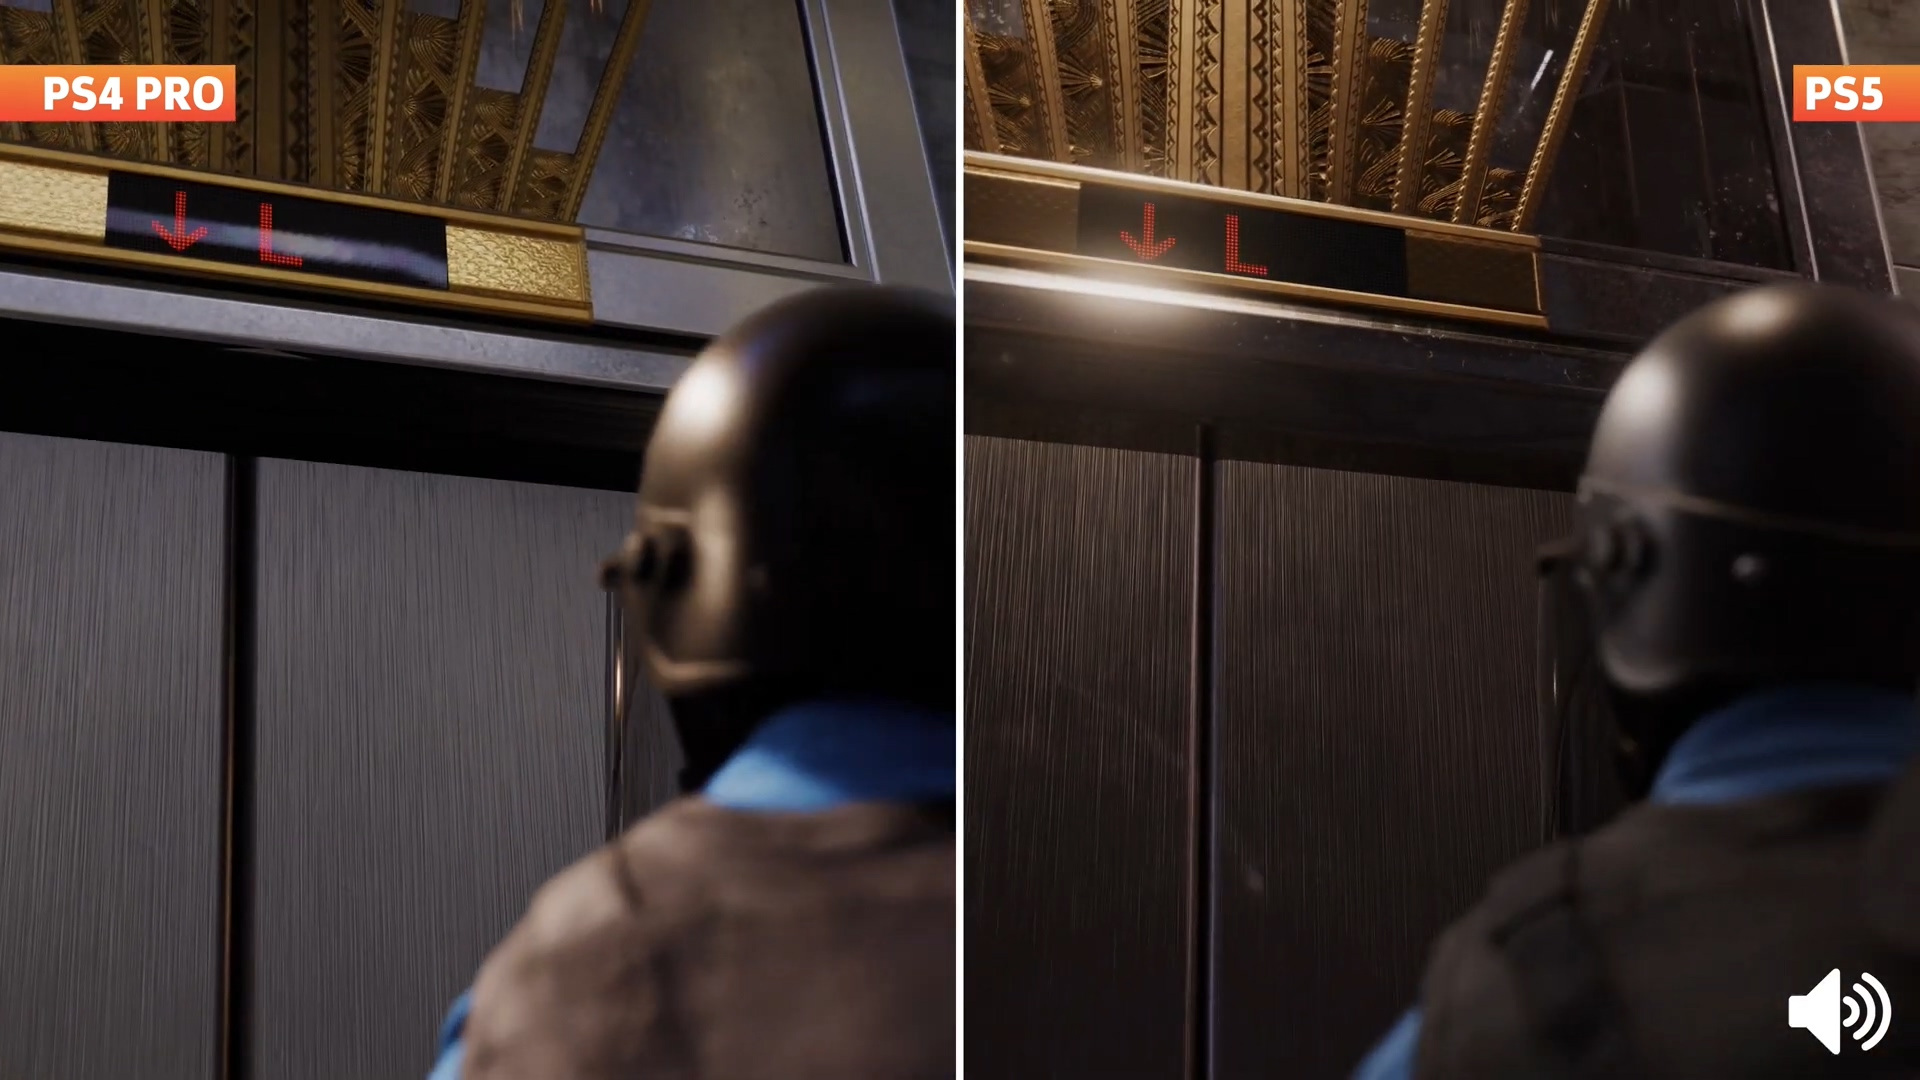 《漫威蜘蛛侠》画面对比视频：PS5 vs PS4 Pro